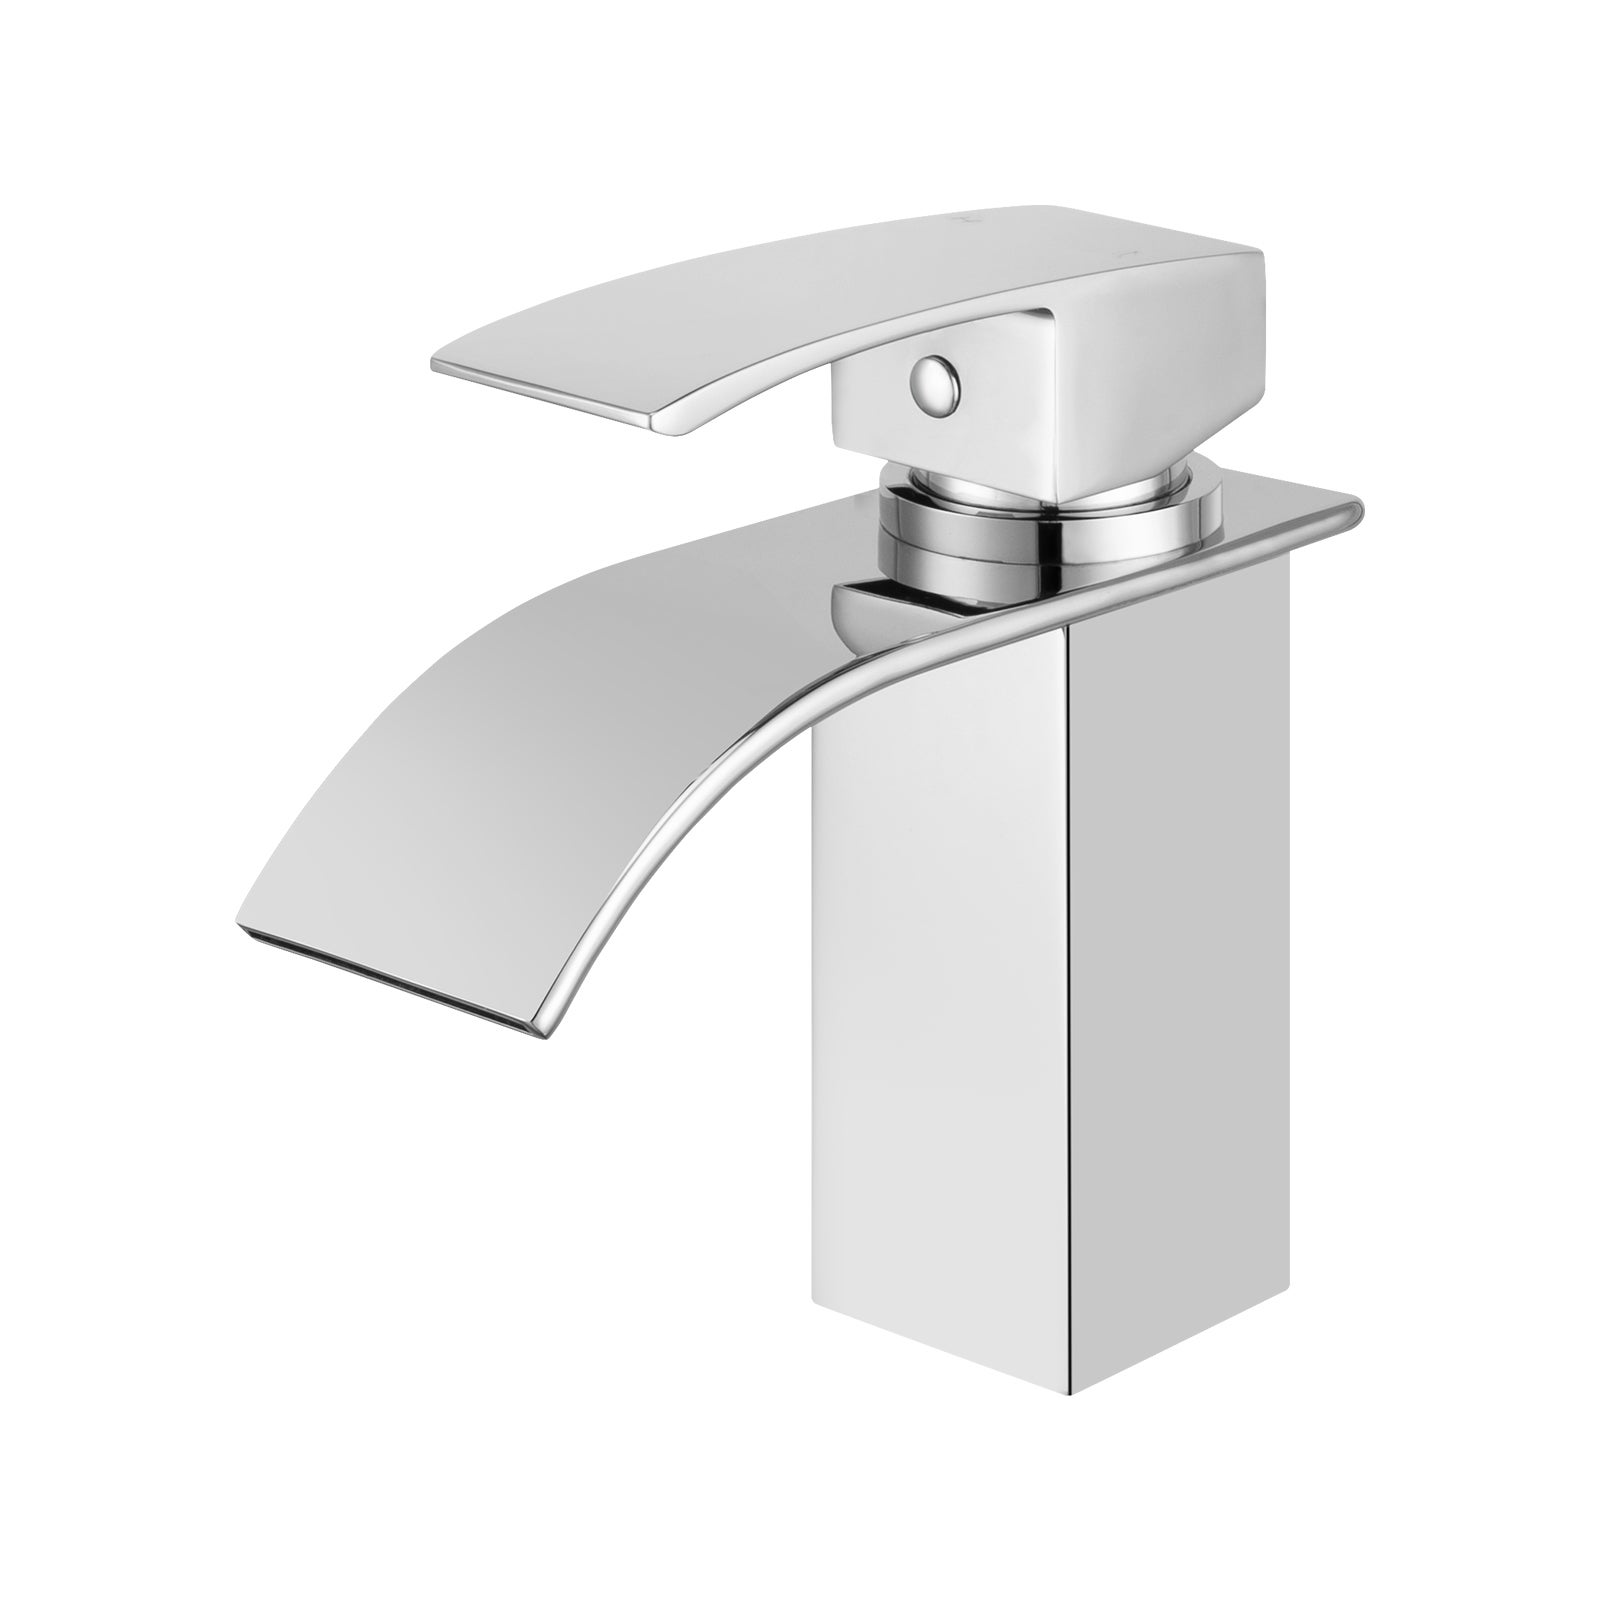 ACA Chrome Waterfall Bathroom Taps Basin Mixer Tap Faucet Vanity Sink Brass WELS Silver